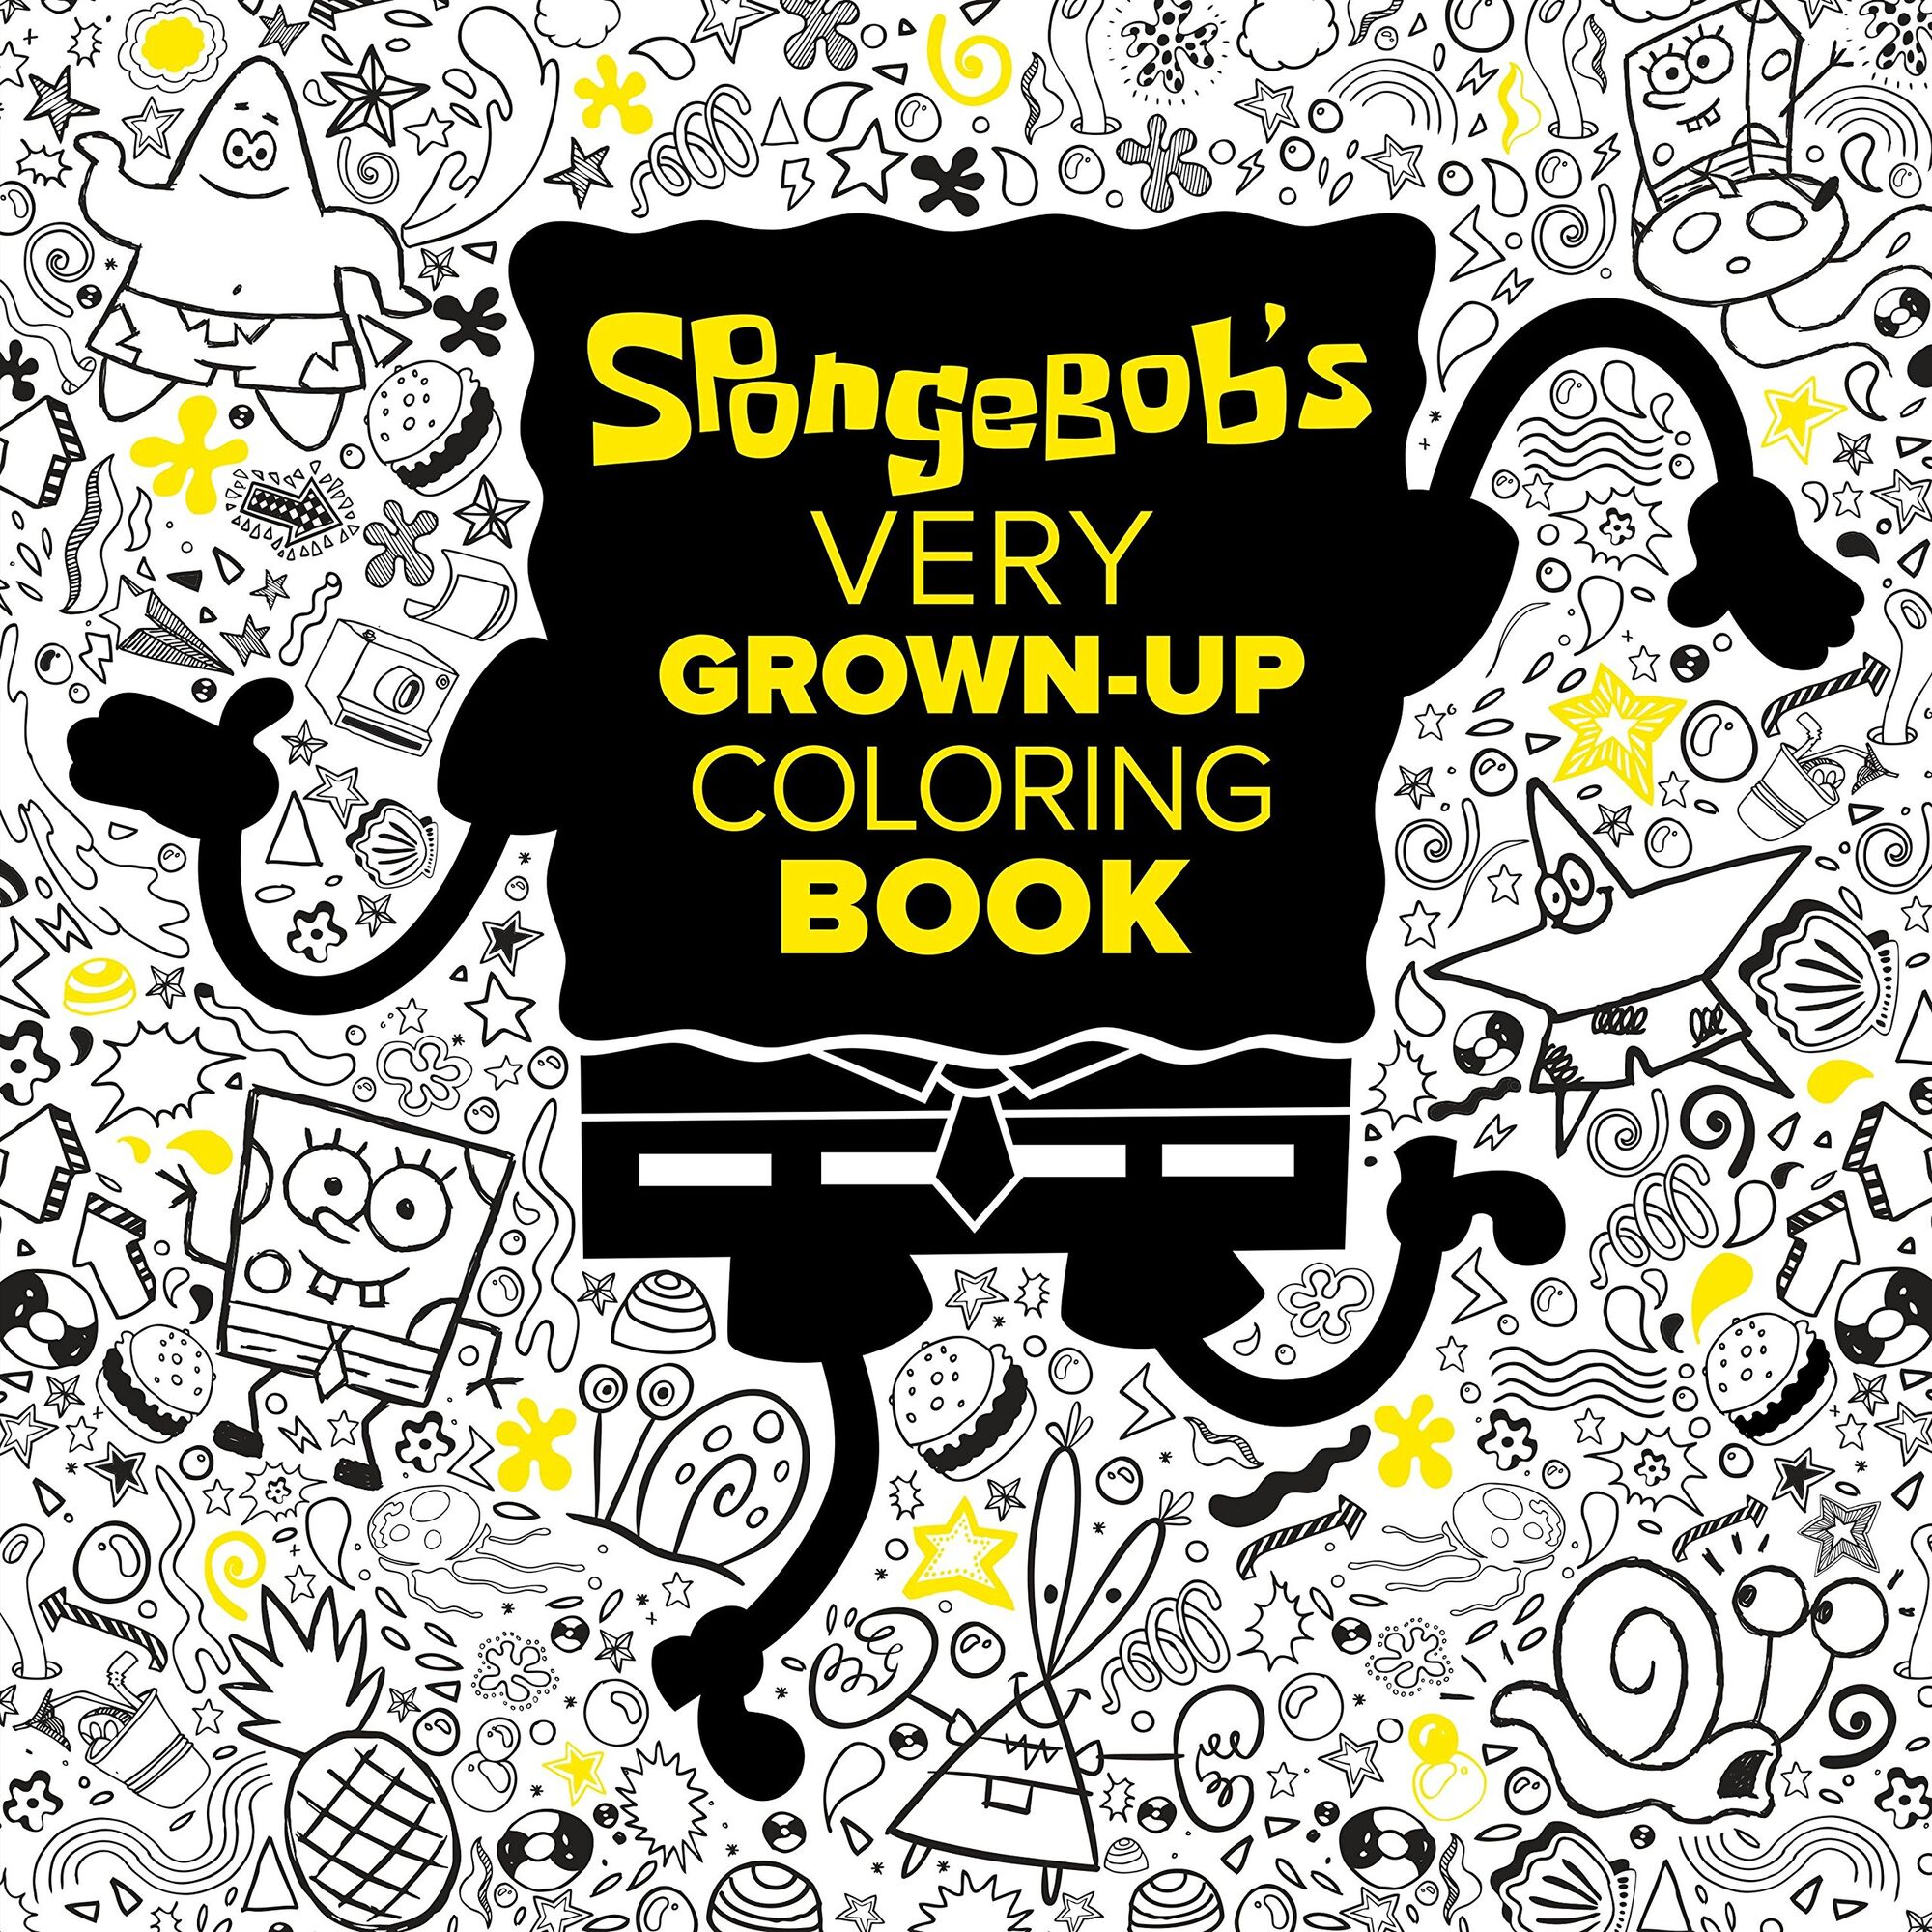 SpongeBob's Very Grown-Up Coloring Book | Encyclopedia ...